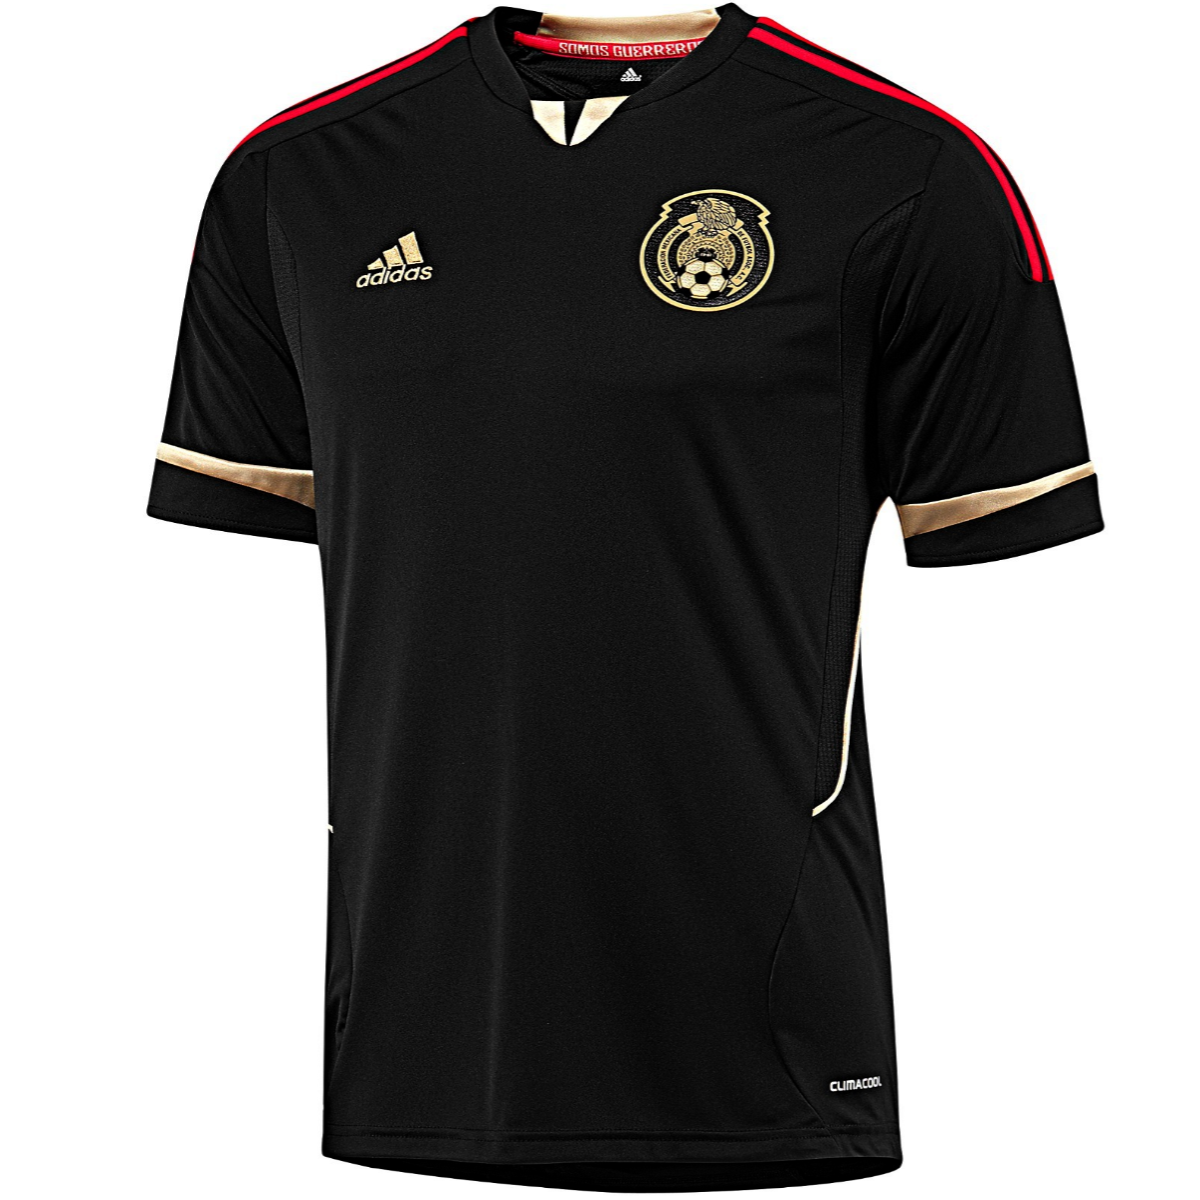 mexico football team jersey